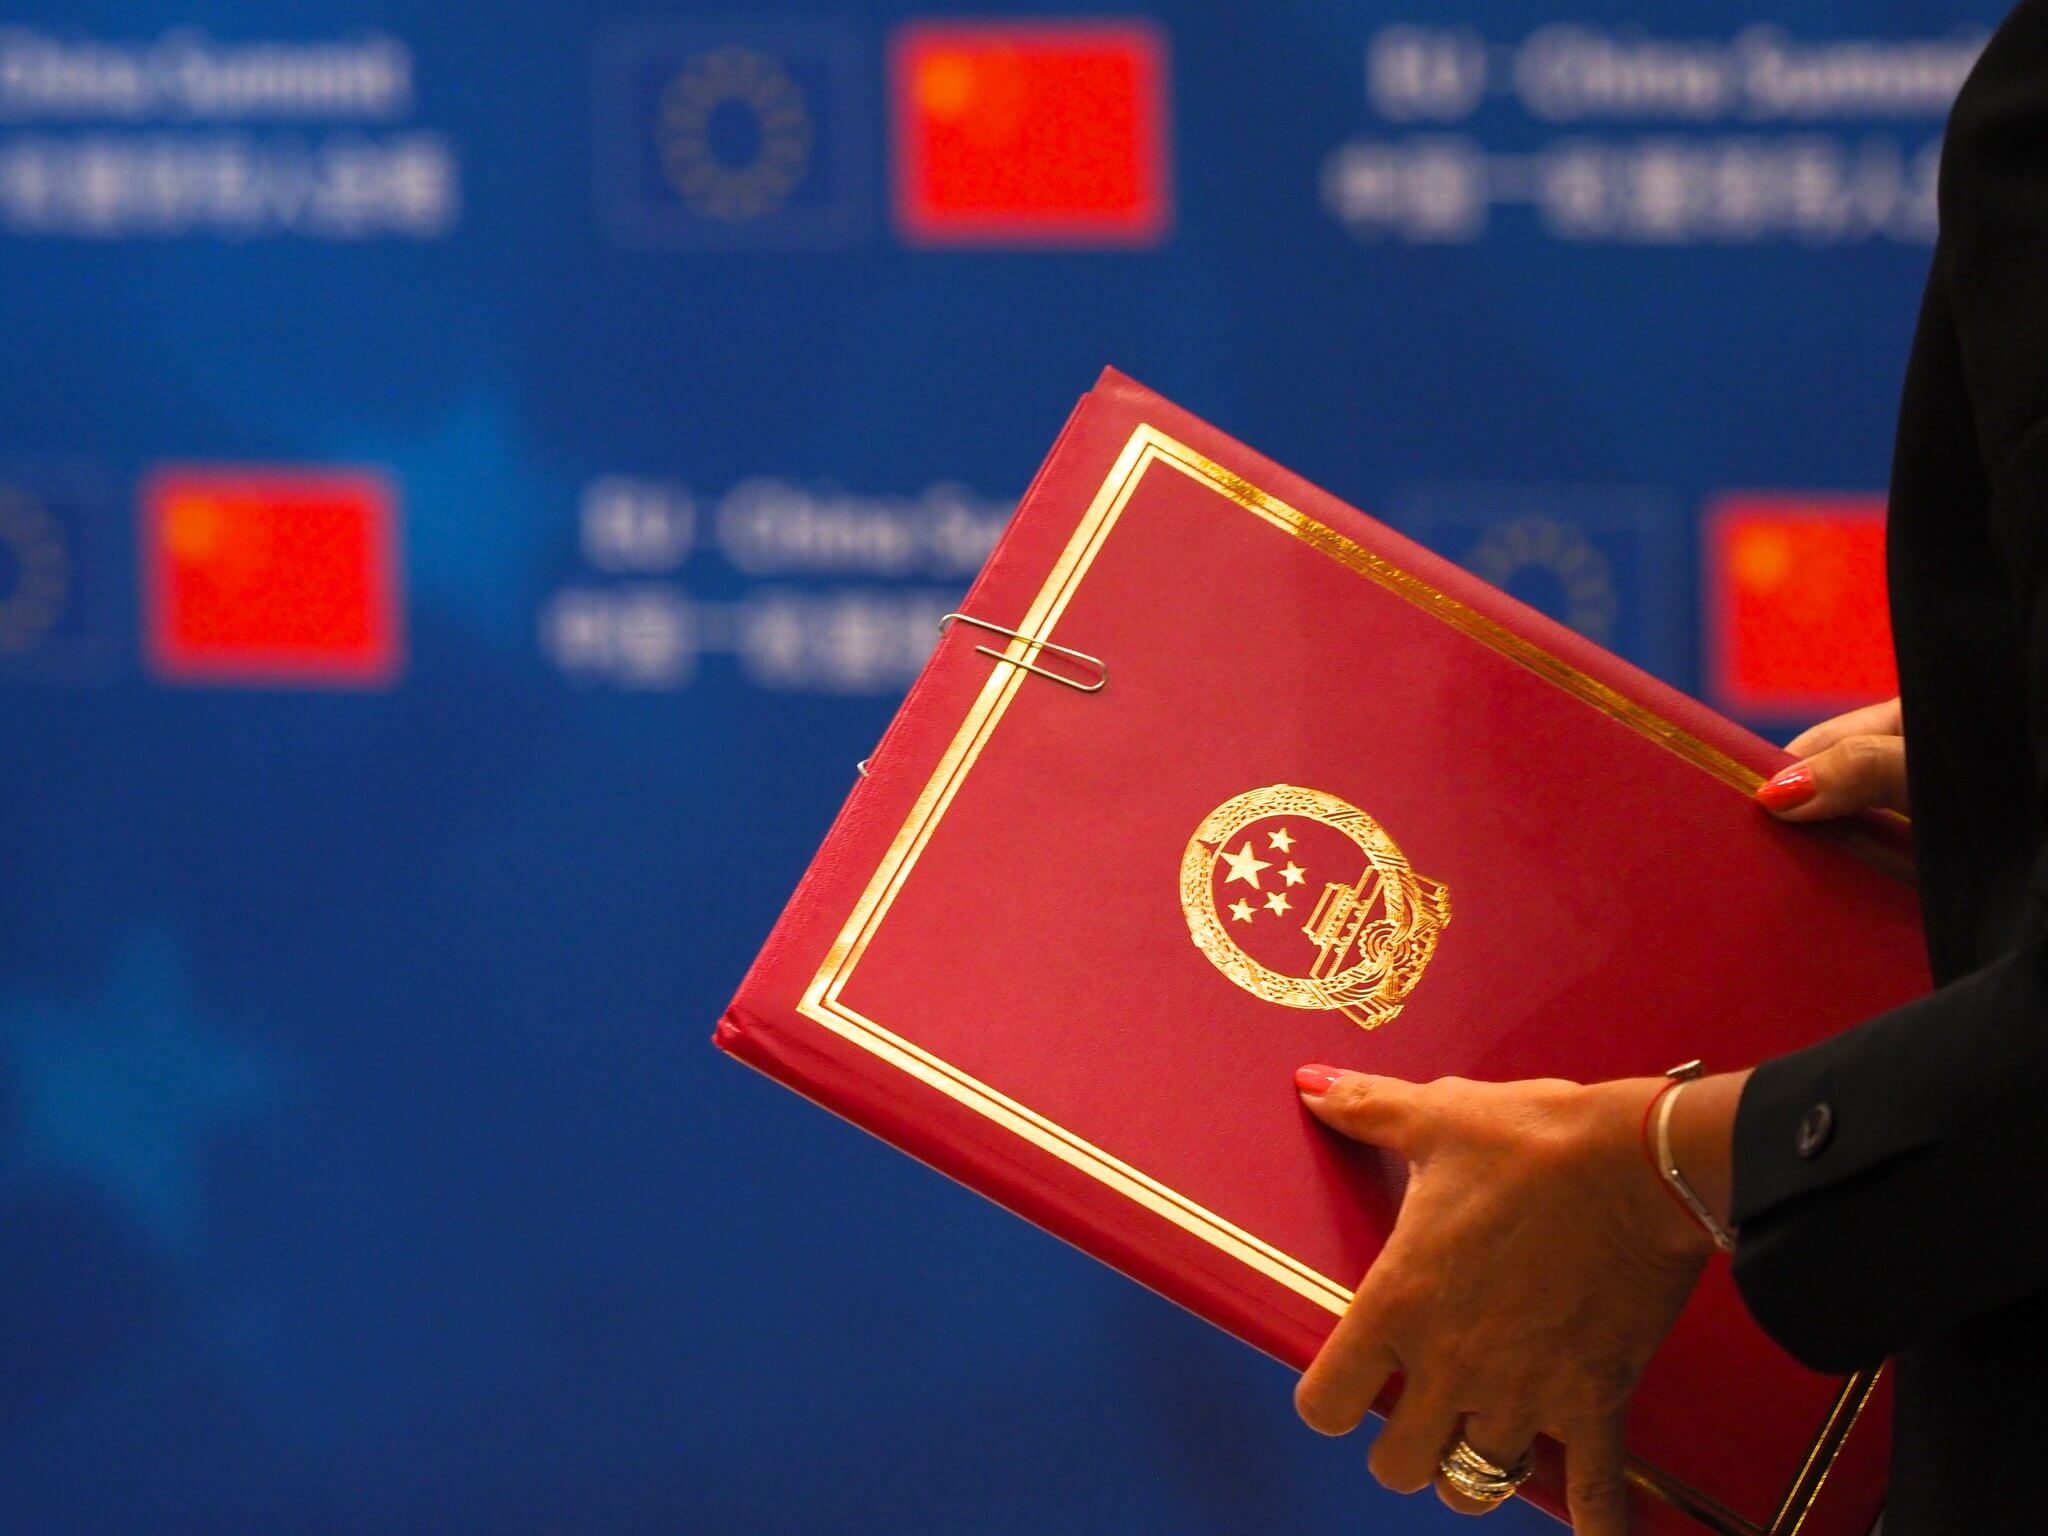 Foto genomen tijdens de EU-China-top in 2017. © Flickr / European Council President